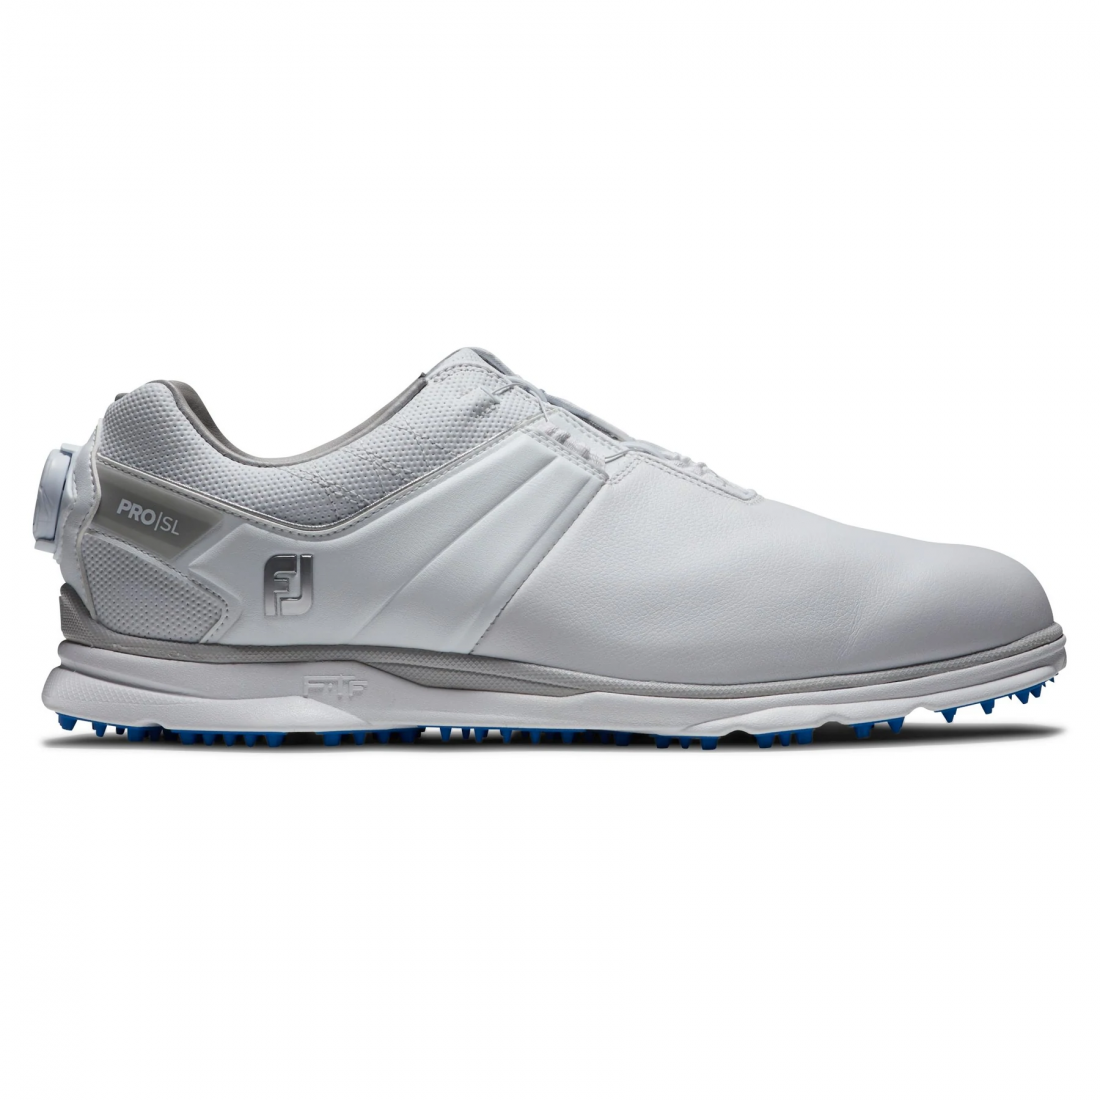 Footjoy chaussures Pro SL Boa blanc/gris